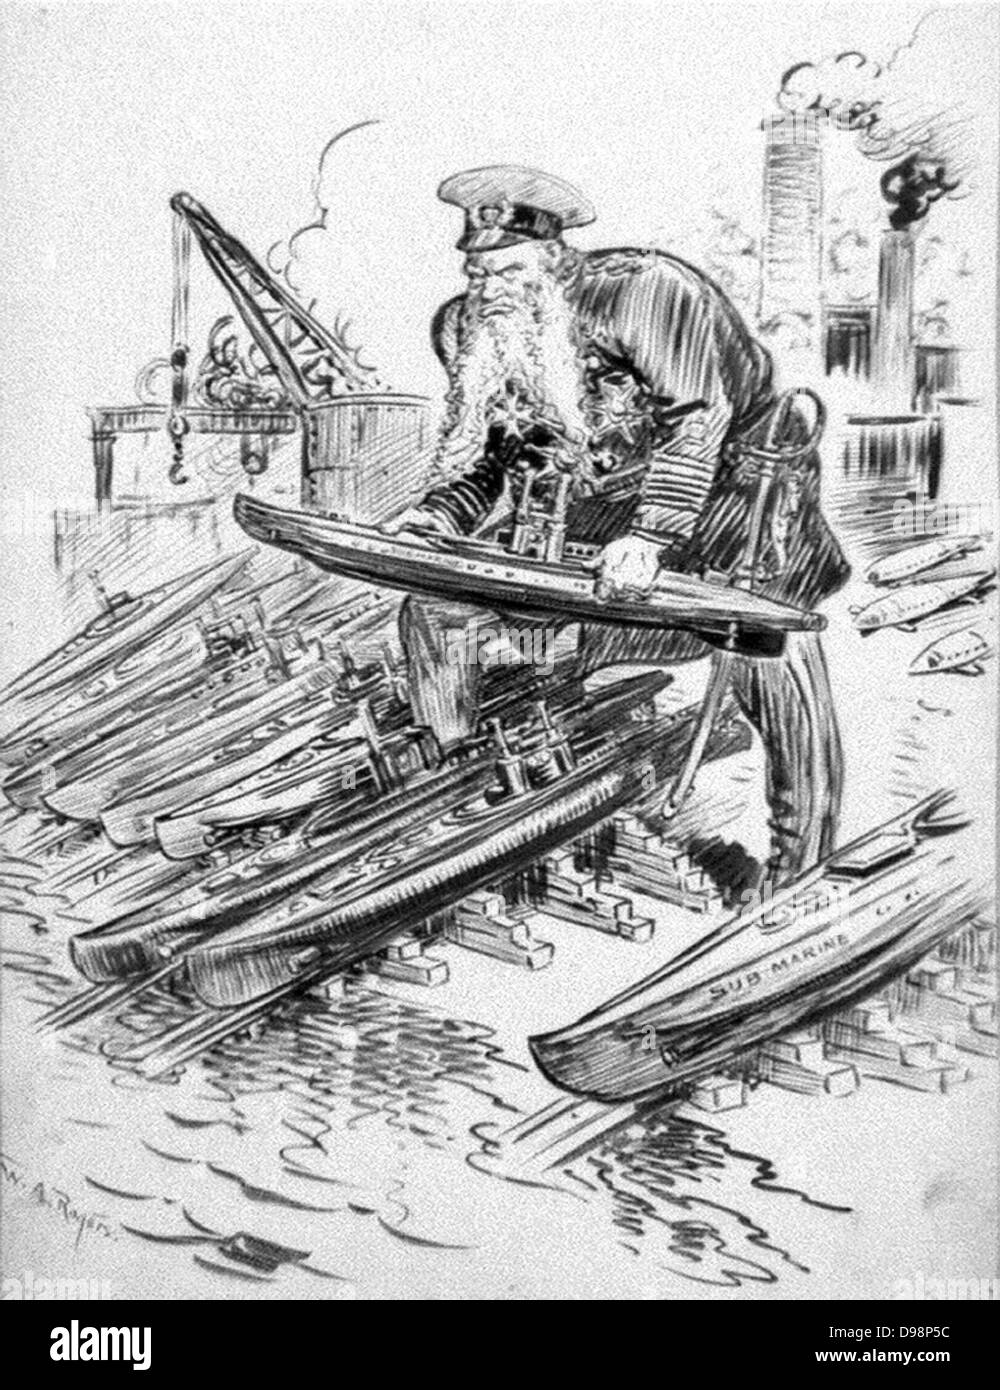 German Grand Admiral Alfred von Tirpitz (1849-1930) with his answer to British naval strength. He promoted unrestricted submarine warfare. William Allen Rogers (1854-1931) American artist. World War I 1914-1918. Naval Stock Photo